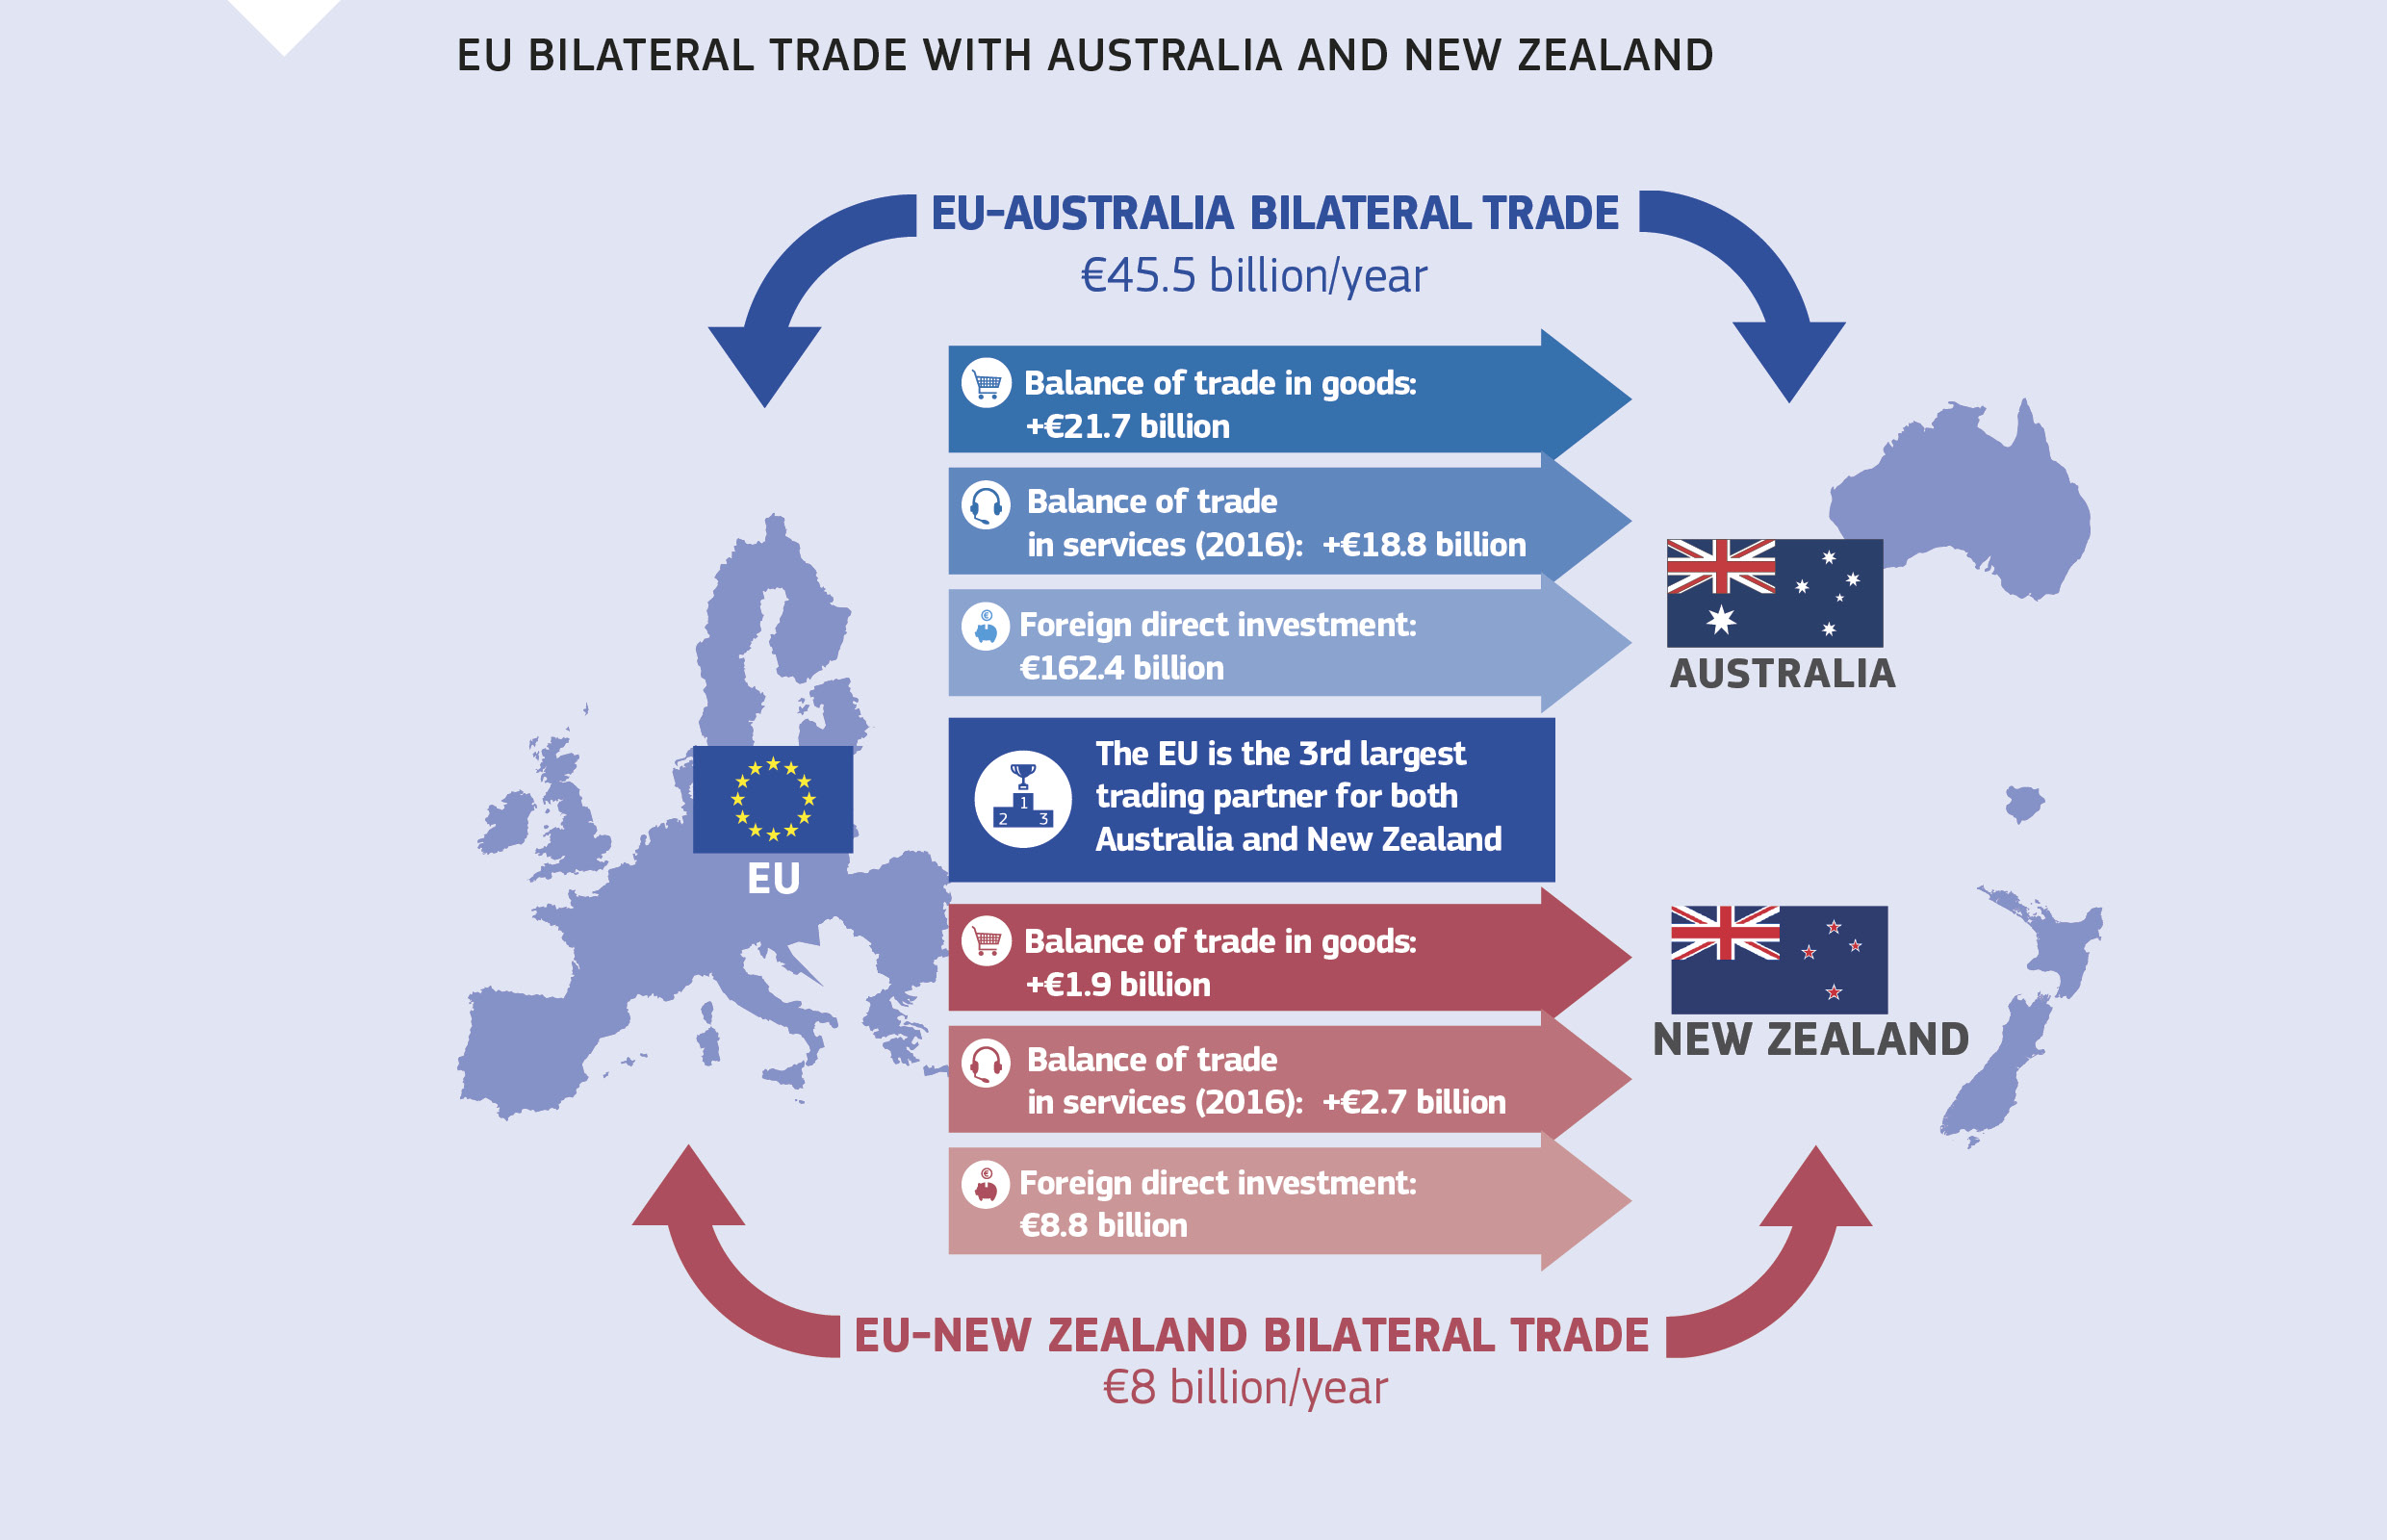 EU BILATERAL TRADE WITH AUSTRALIA AND NEW ZEALAND